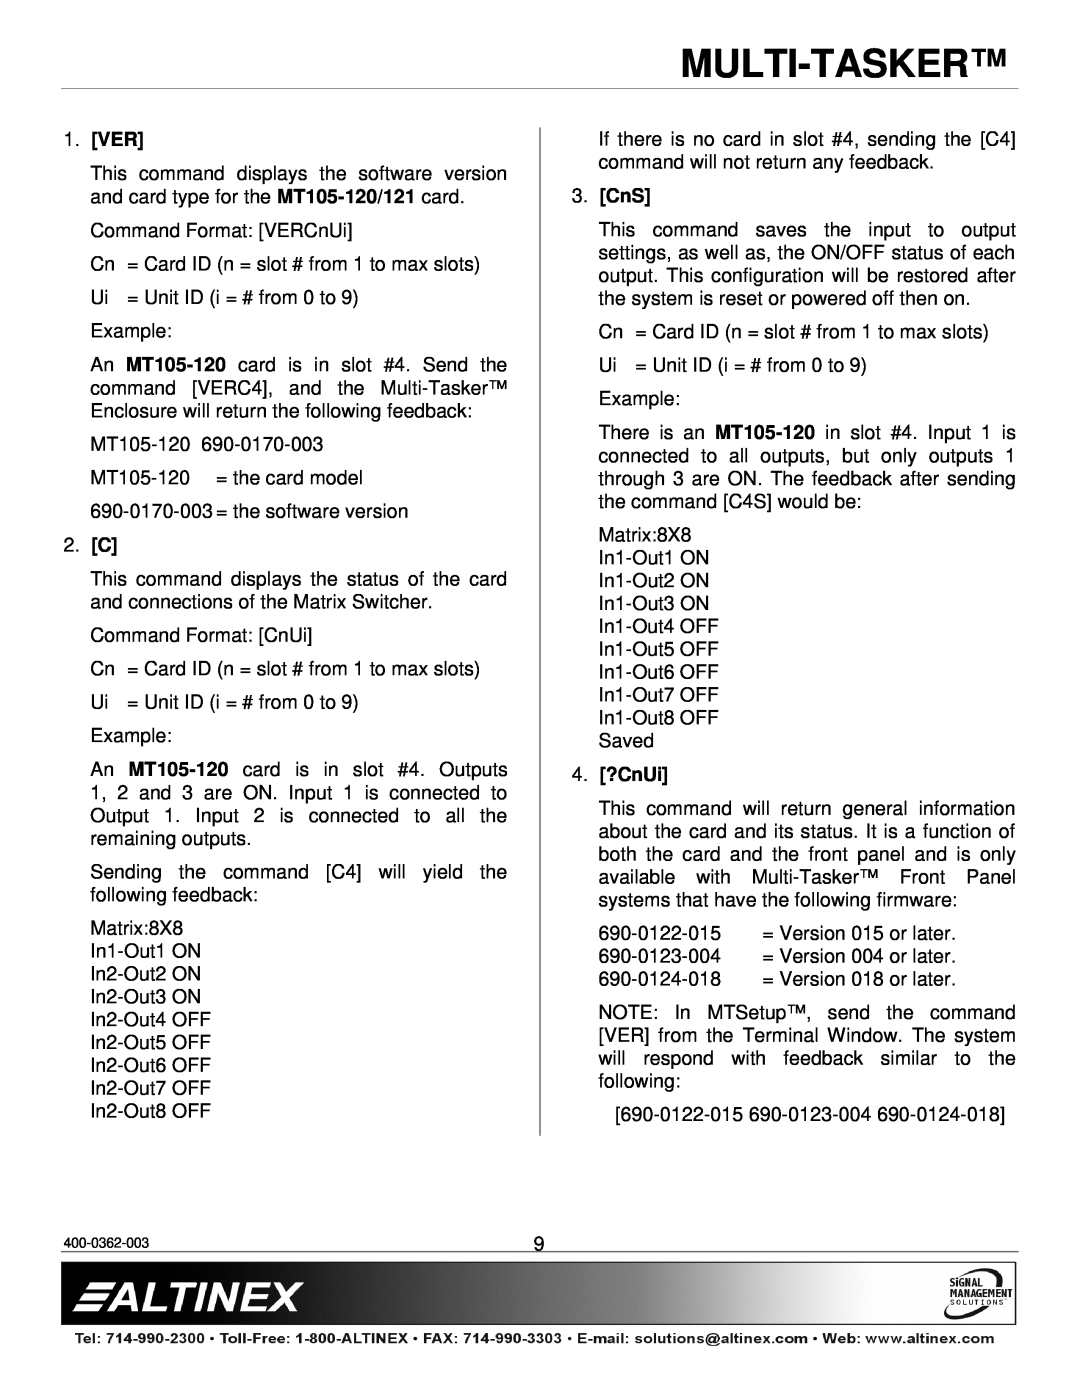 Altinex MT105-120/121 manual Ver, 2. C, CnS, 4. ?CnUi, Multi-Tasker 